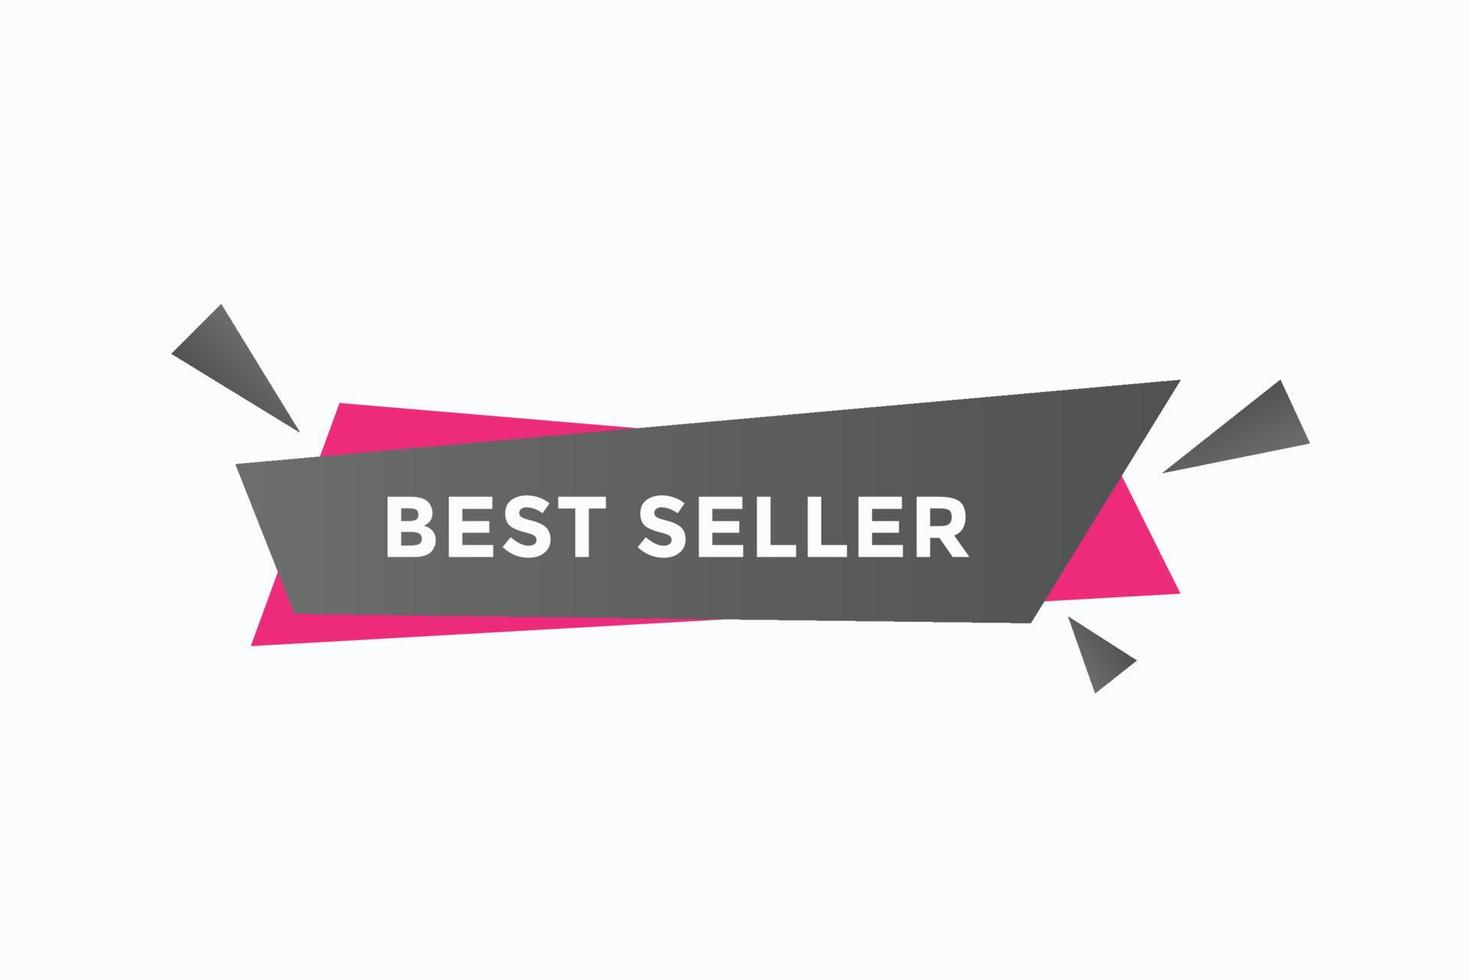 best seller button vectors. sign label speech bubble best seller vector